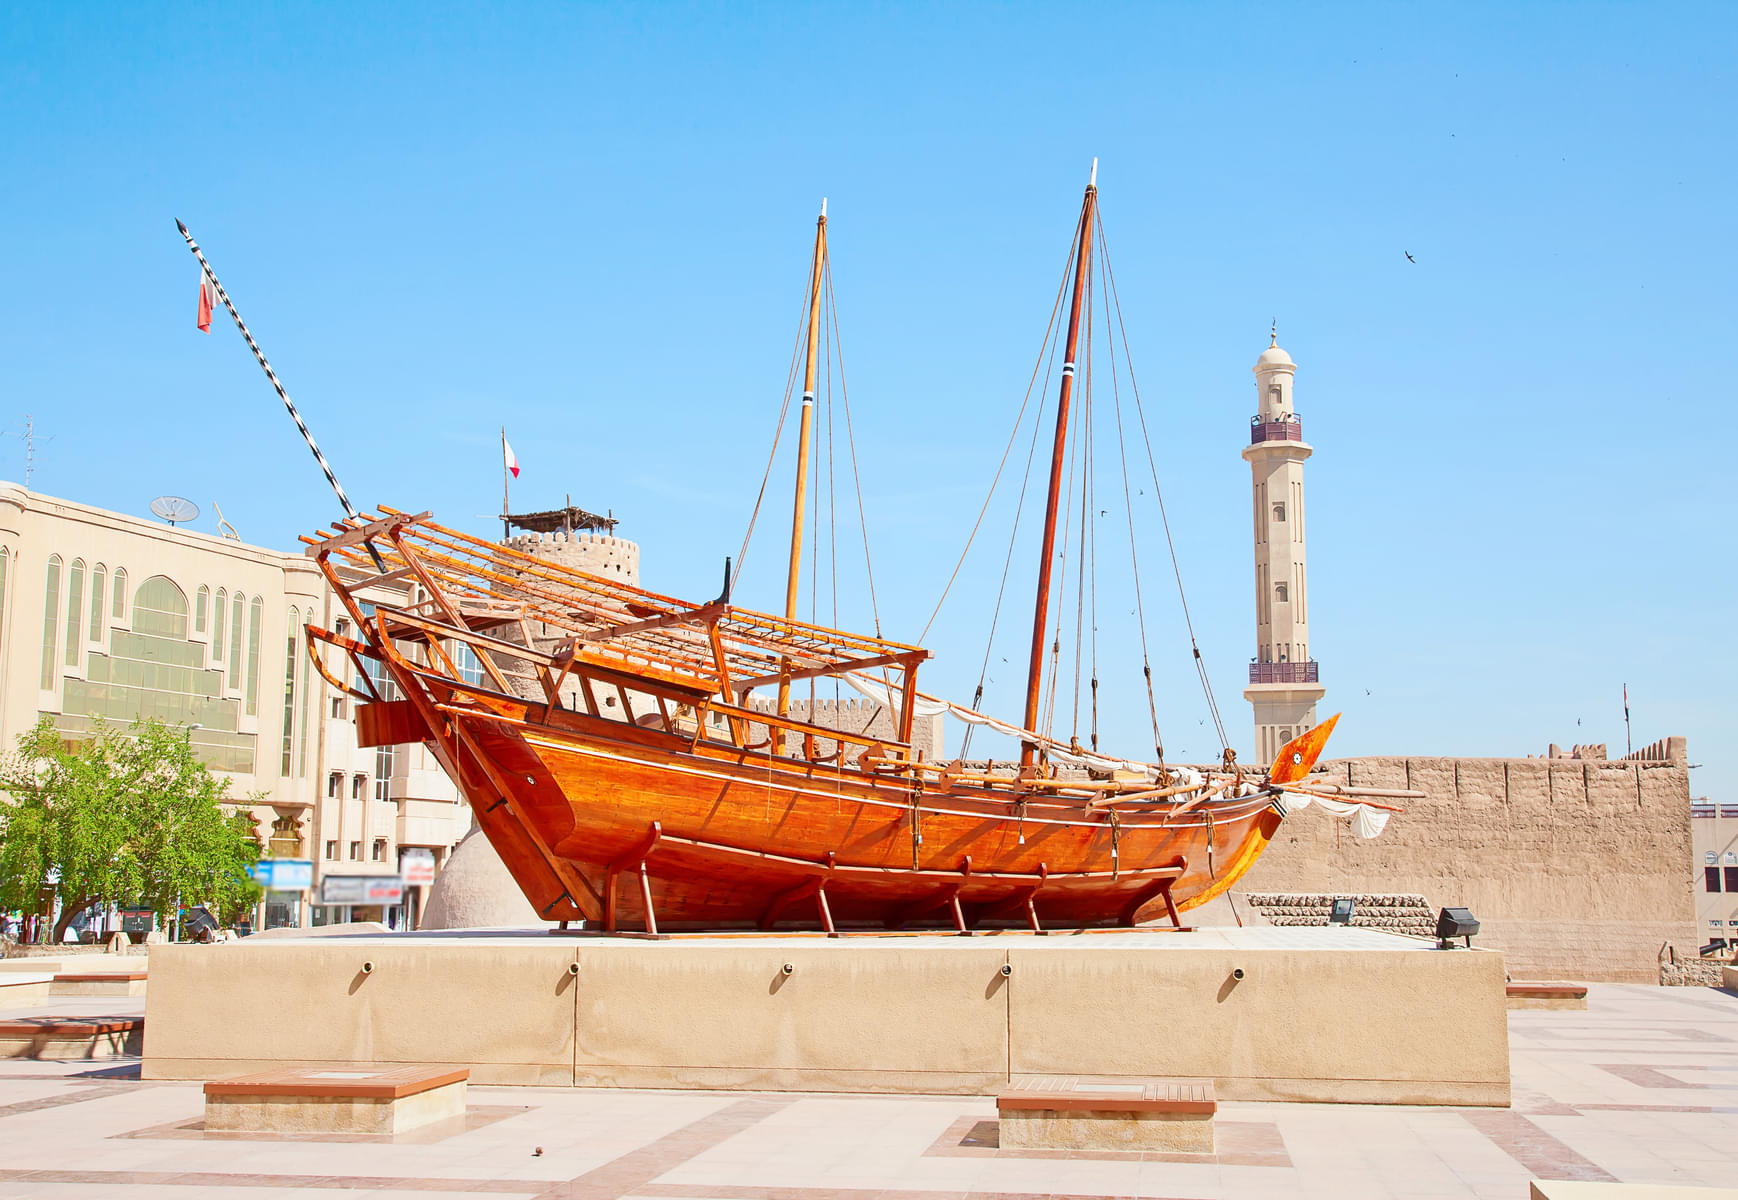 Dubai Museum showcasing Dubai's history and its original heritage